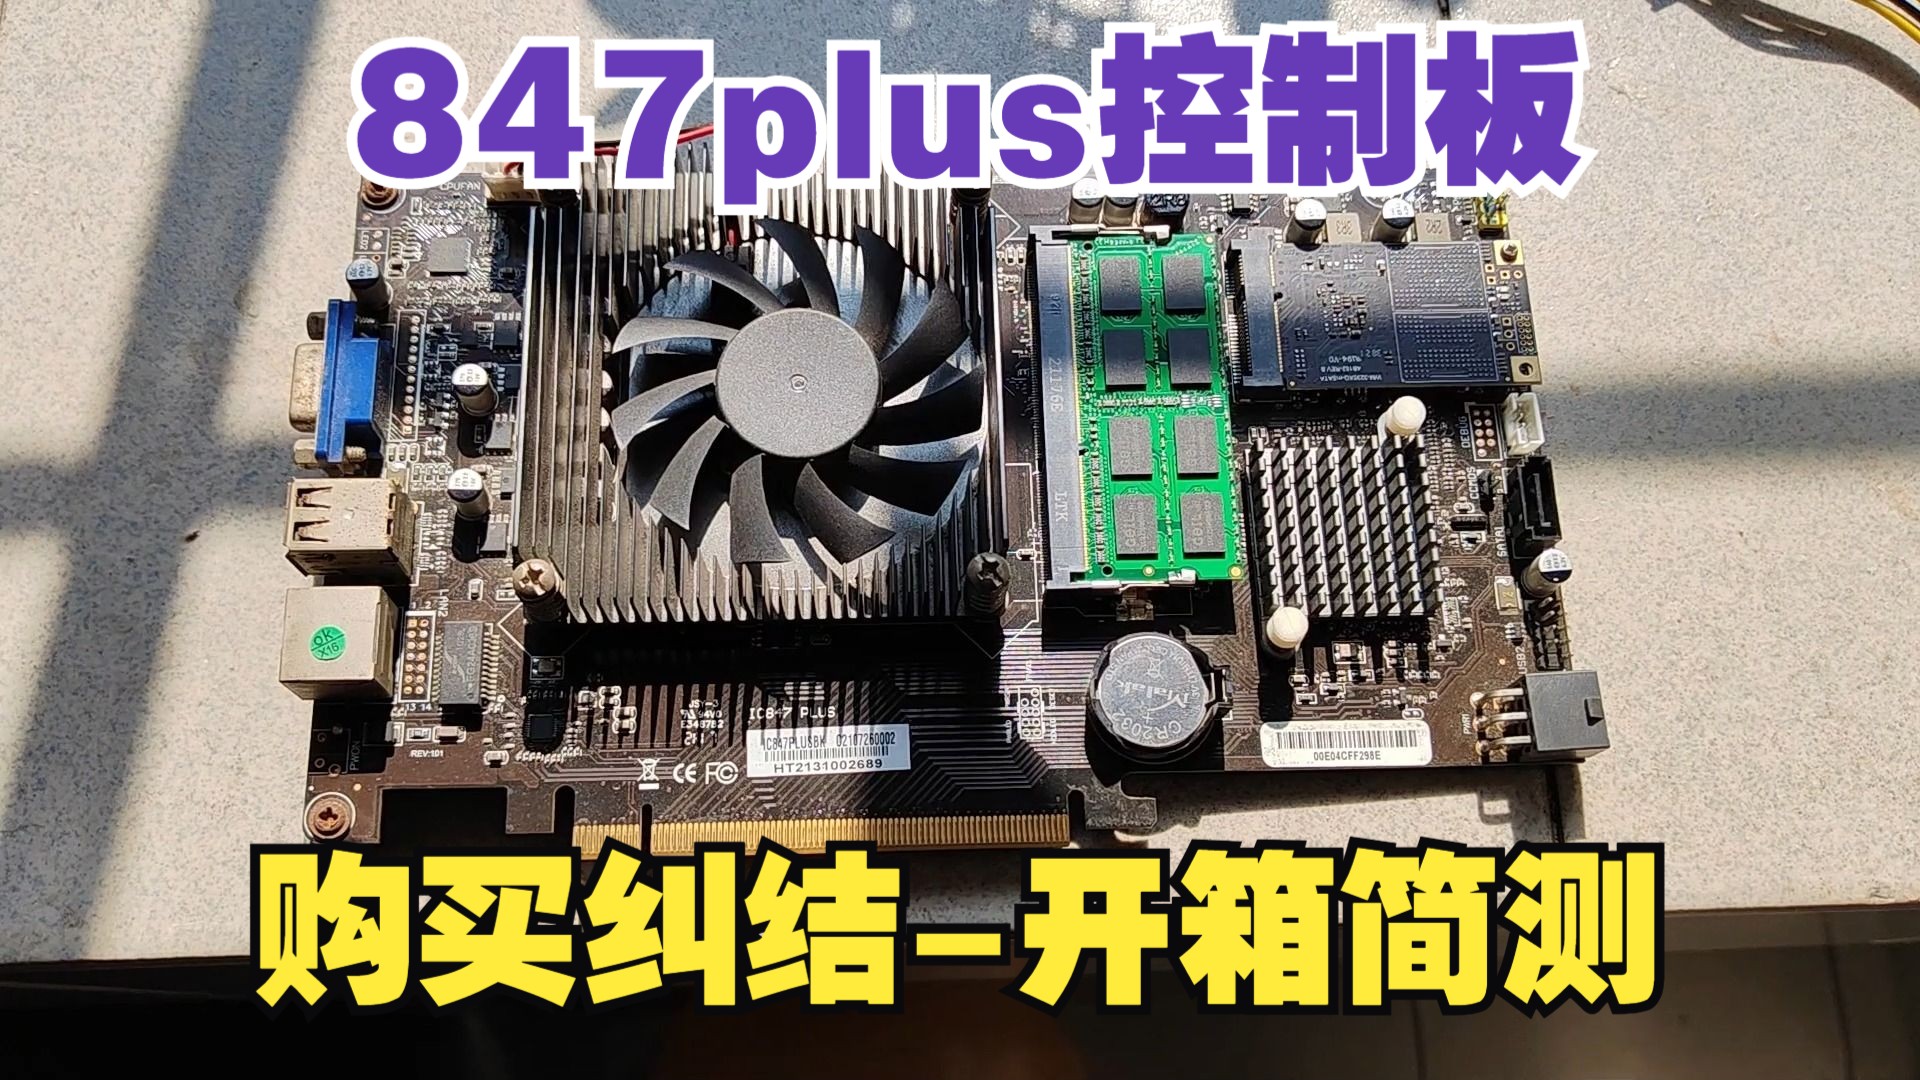 847plus控制板-购买纠结-开箱简测